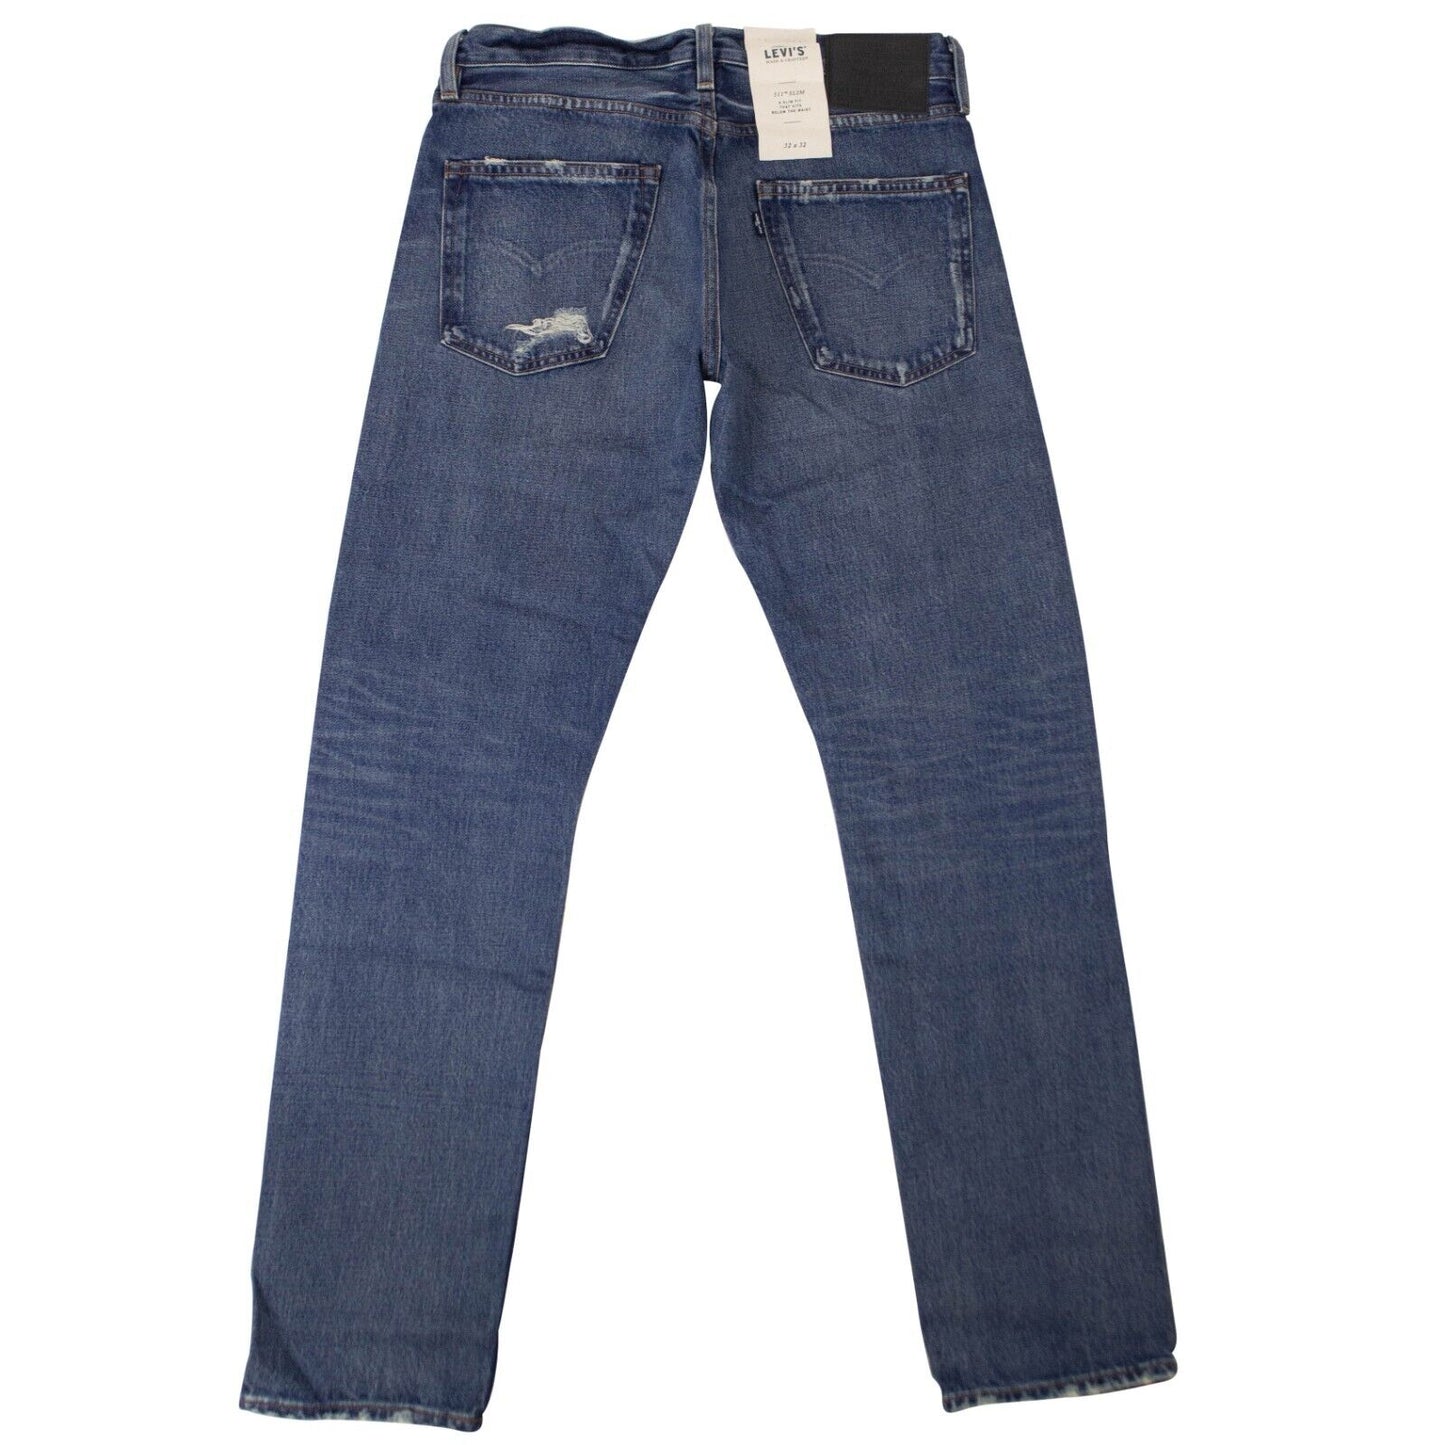 Levi'S 511 Distressed Jeans - Blue